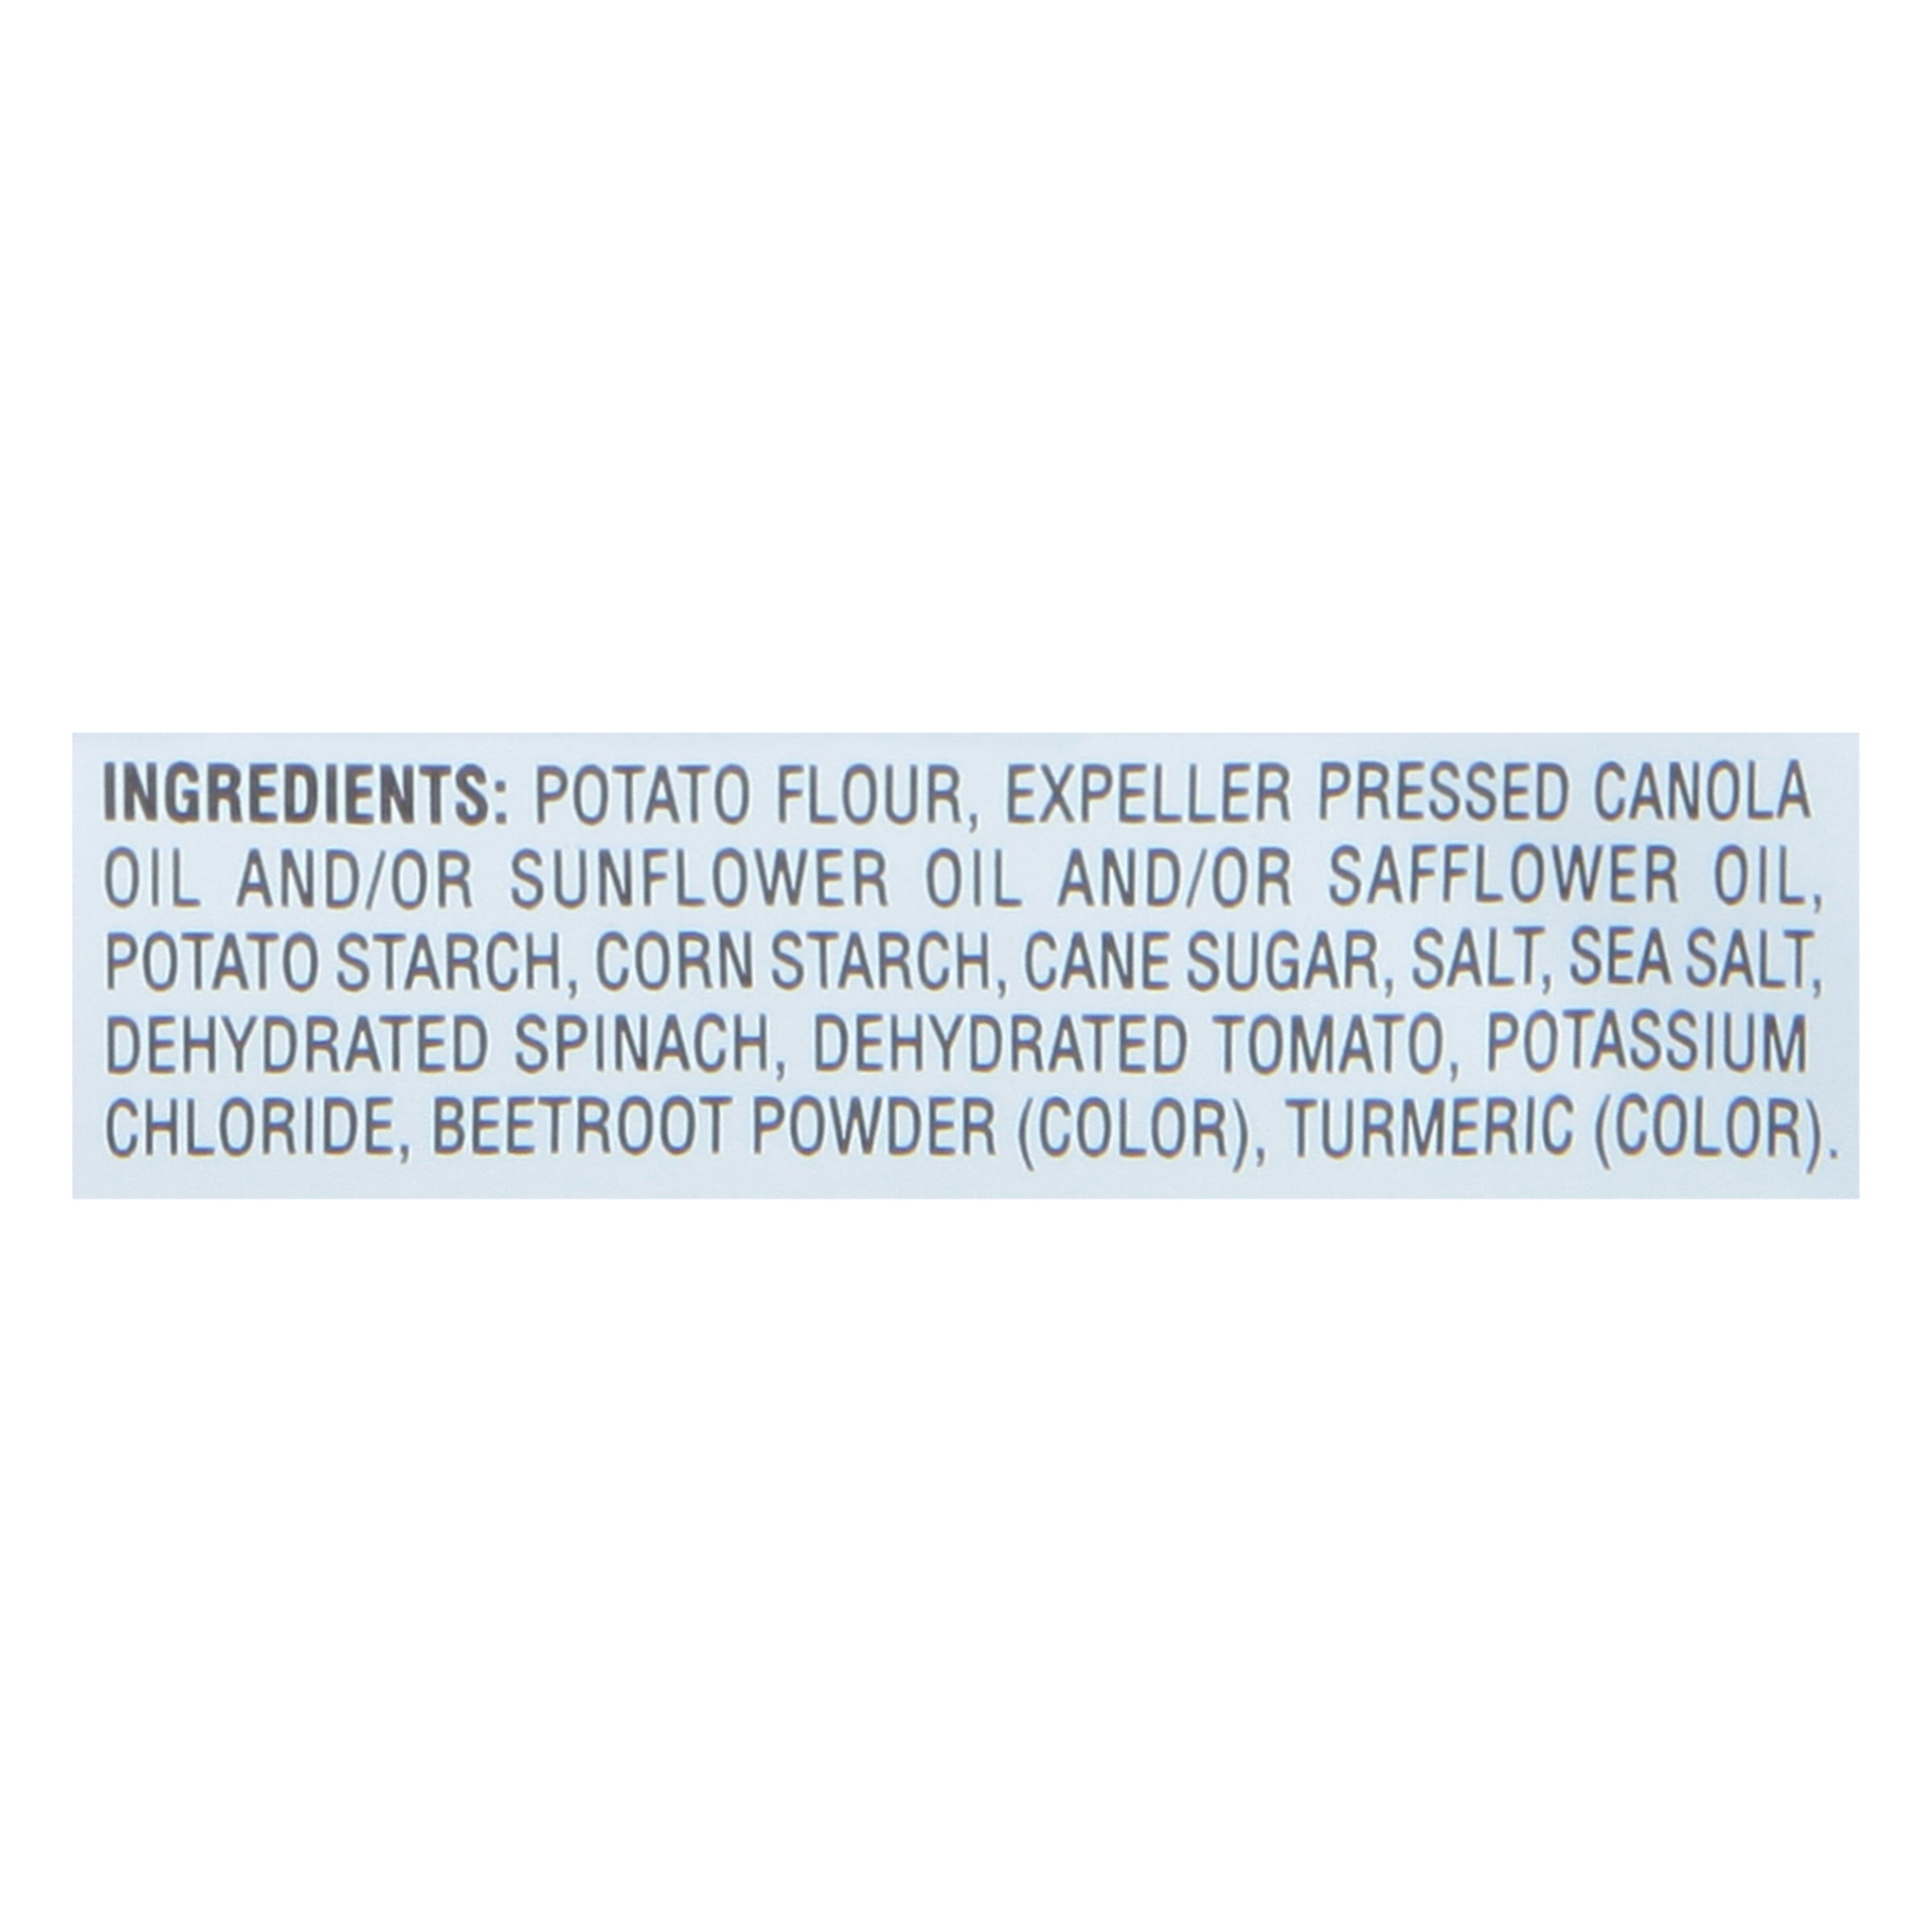 Sensible Portions Gluten-Free Sea Salt Mini Hearts Veggie Snack Chips, 0.5  oz (12 Count) 